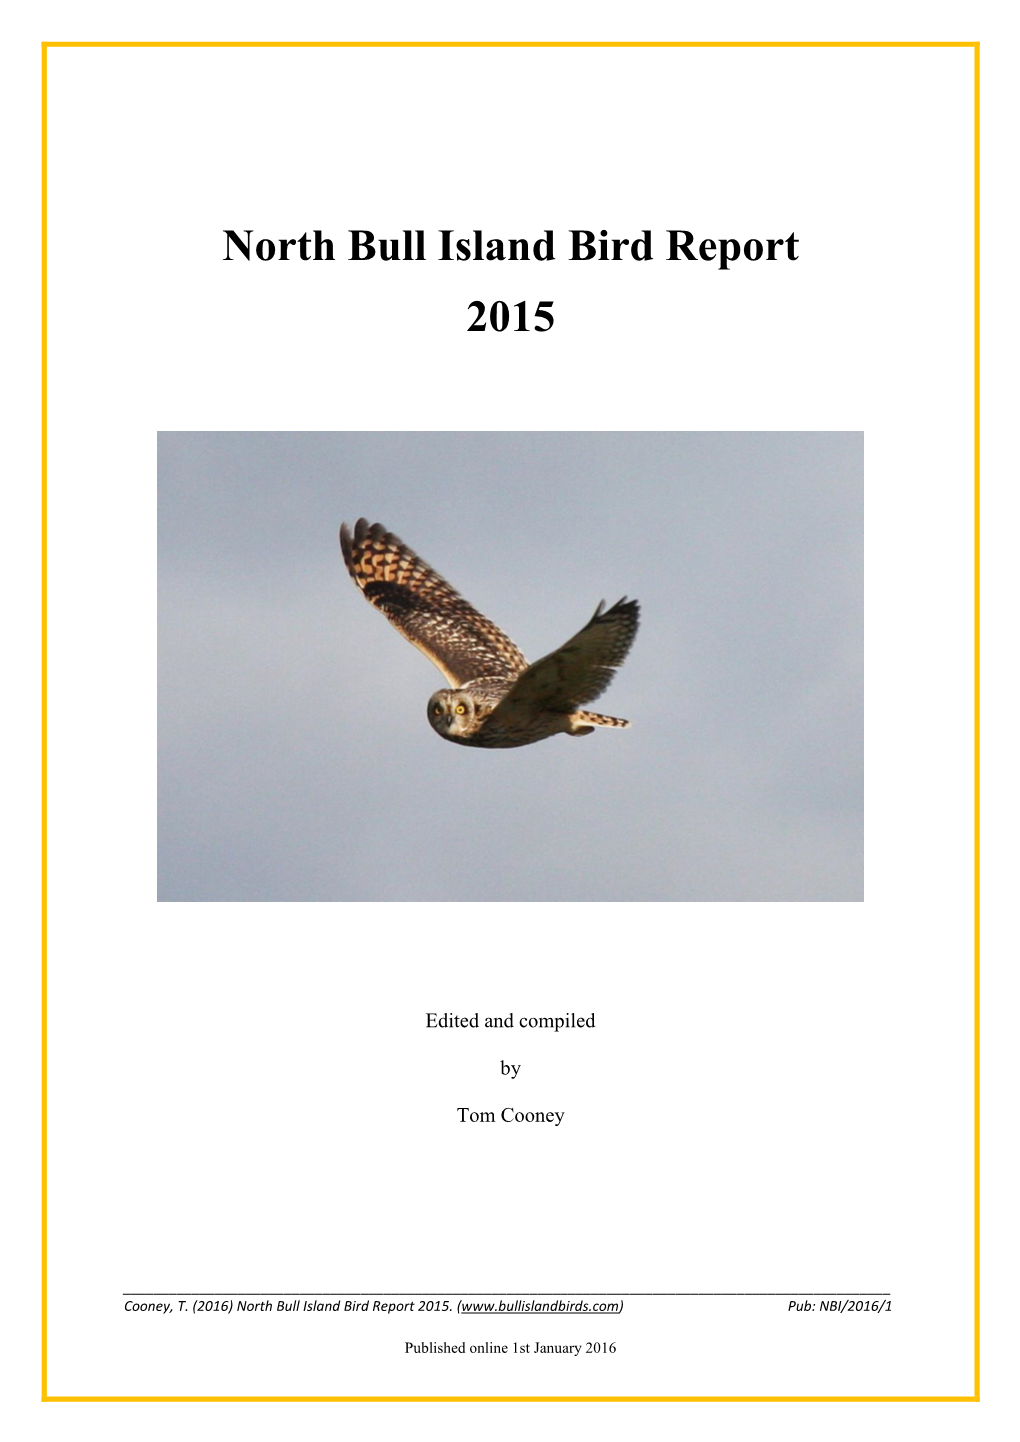 North Bull Island Bird Report 2015